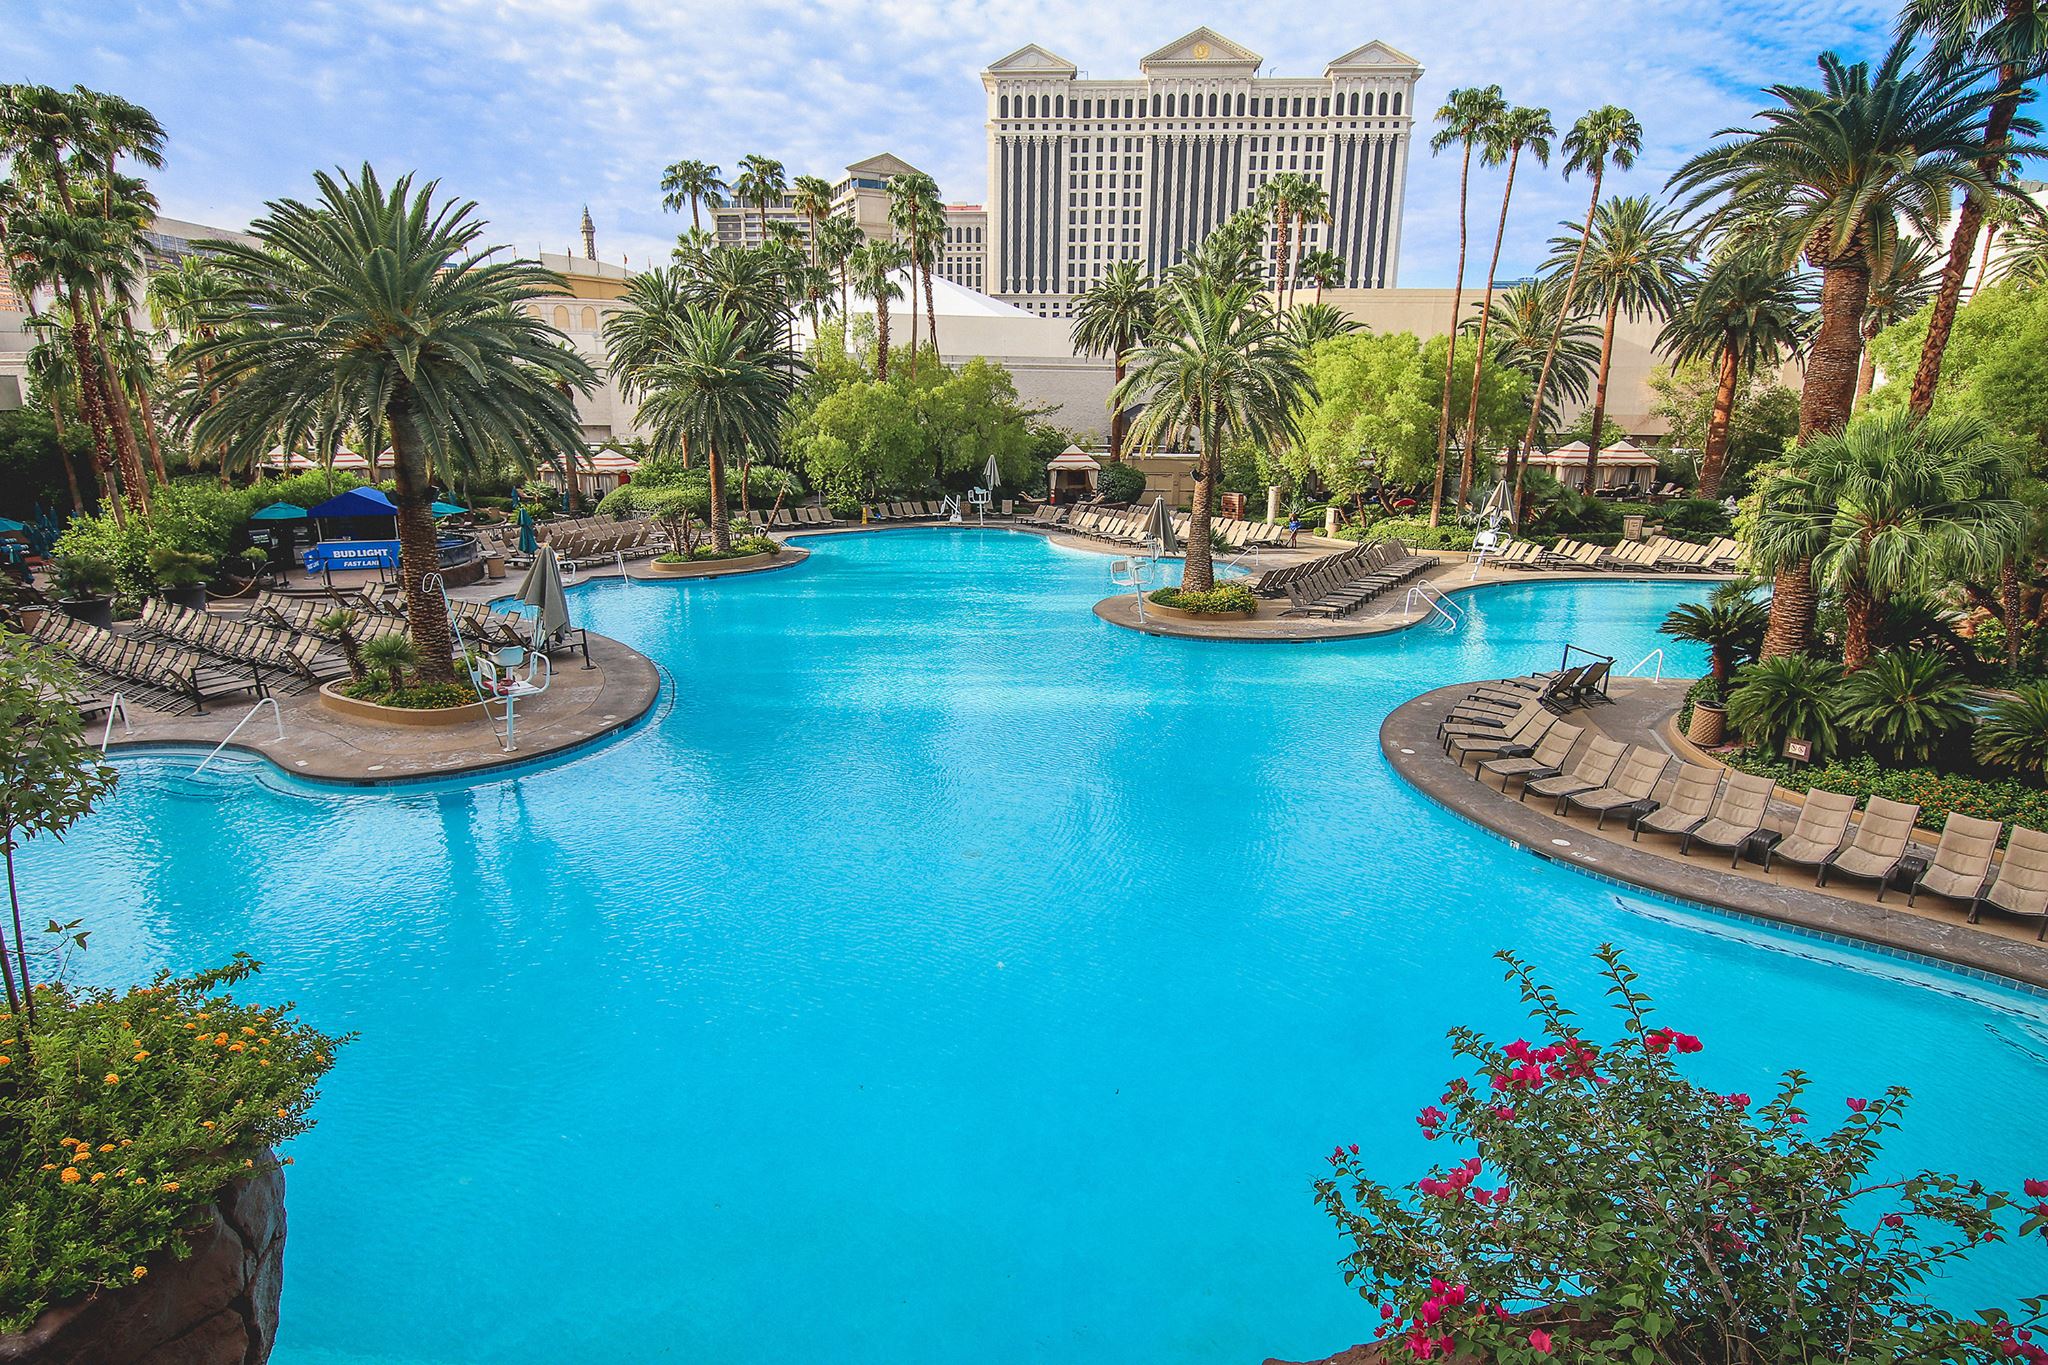 What’s hot on the Las Vegas pool scene this season